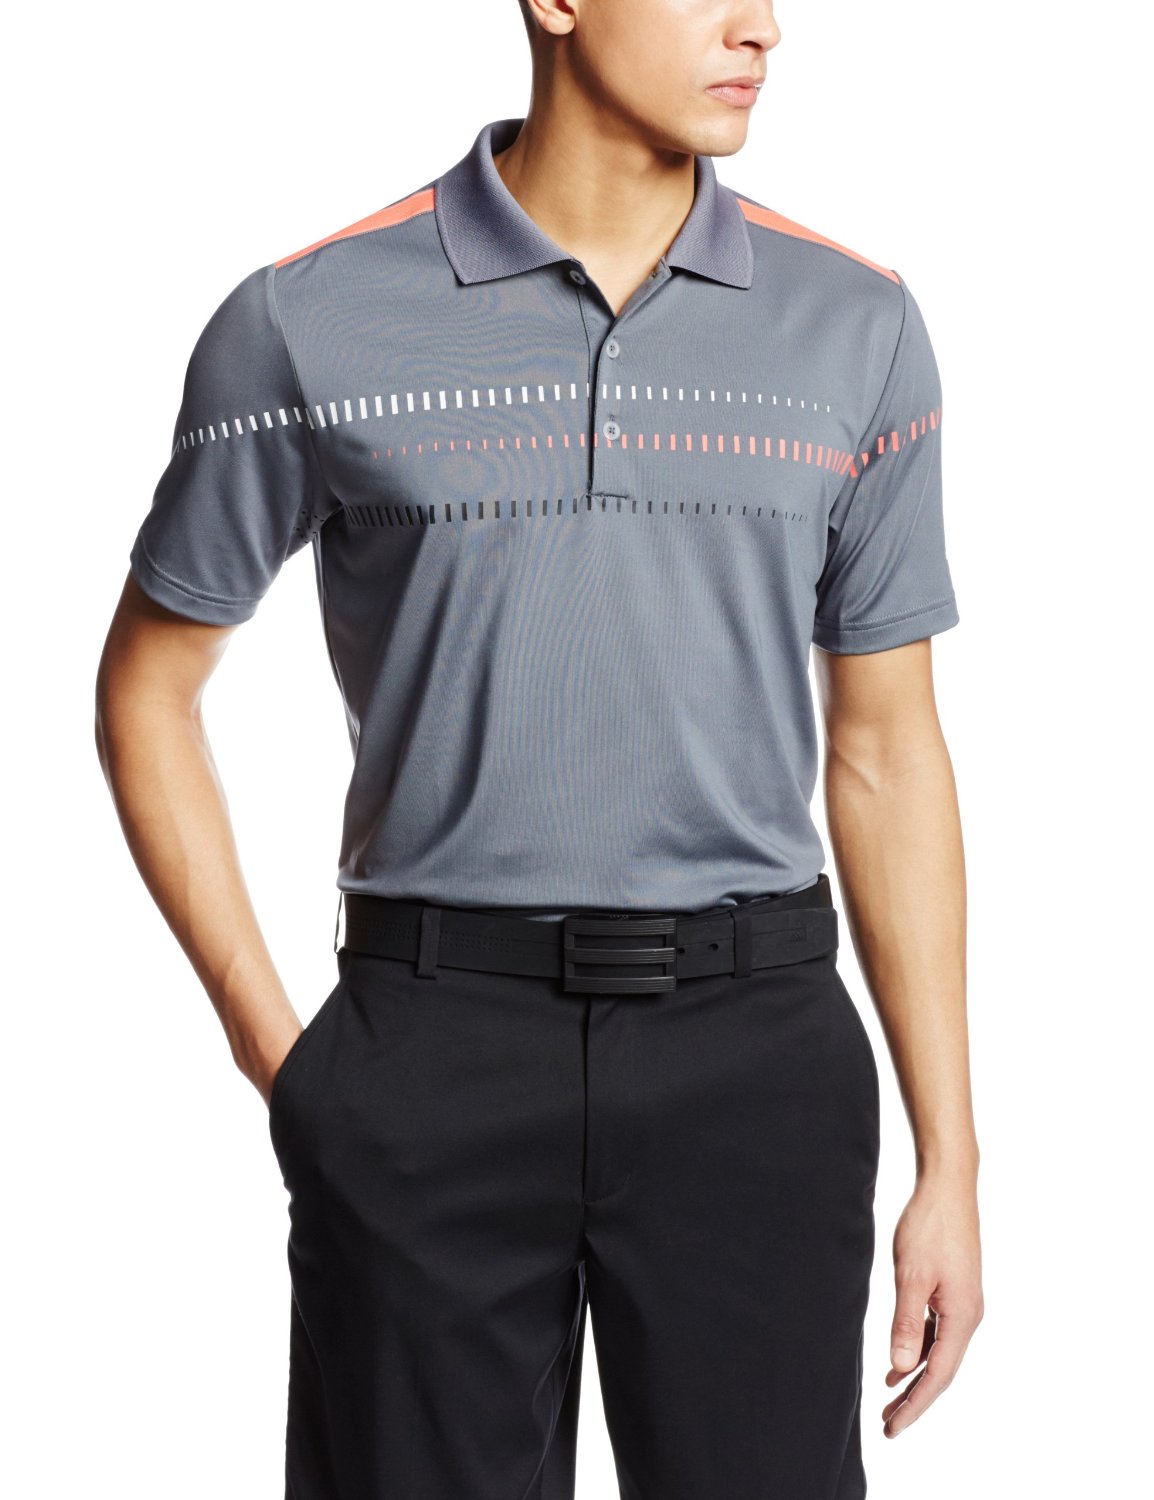 Adidas Puremotion Tour Climacool Digital Print Golf Polo Shirts